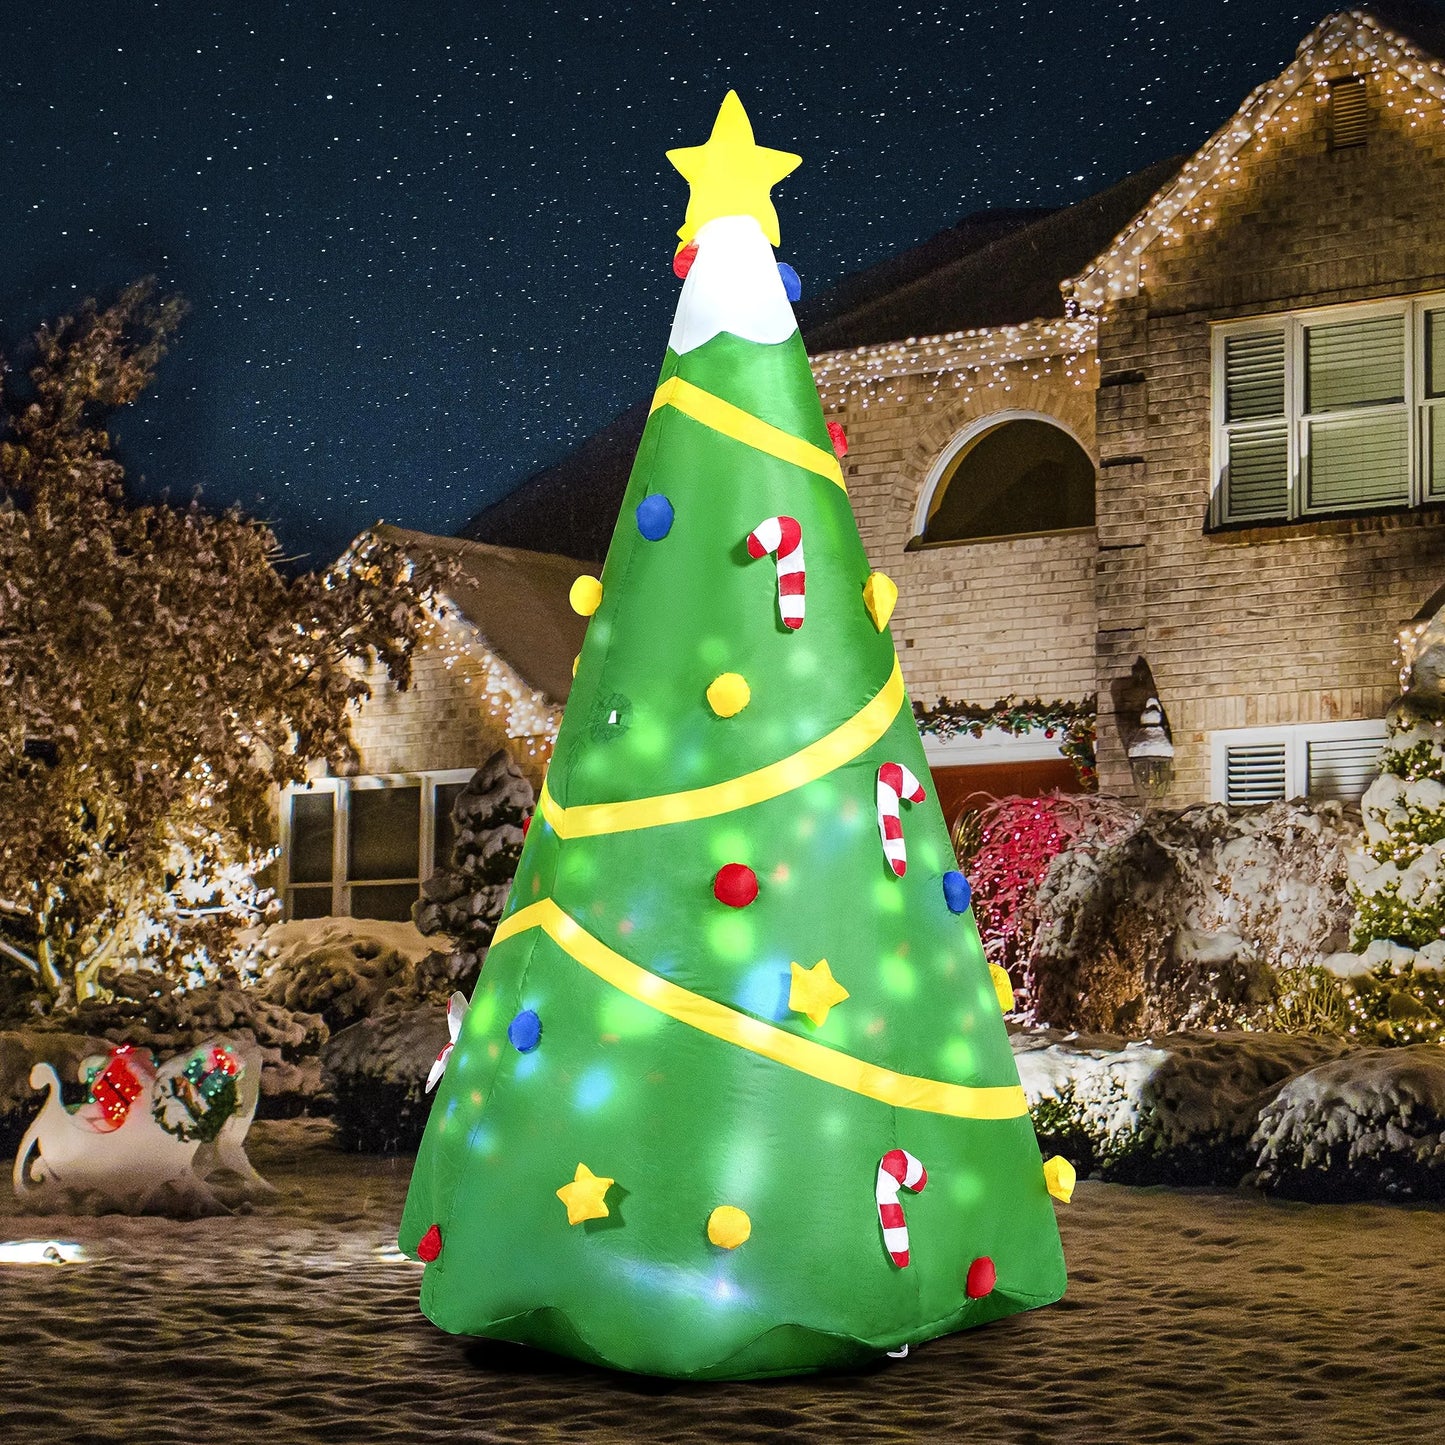 Jumbo Christmas Tree with Lights Inflatable (8 ft) – Joiedomi